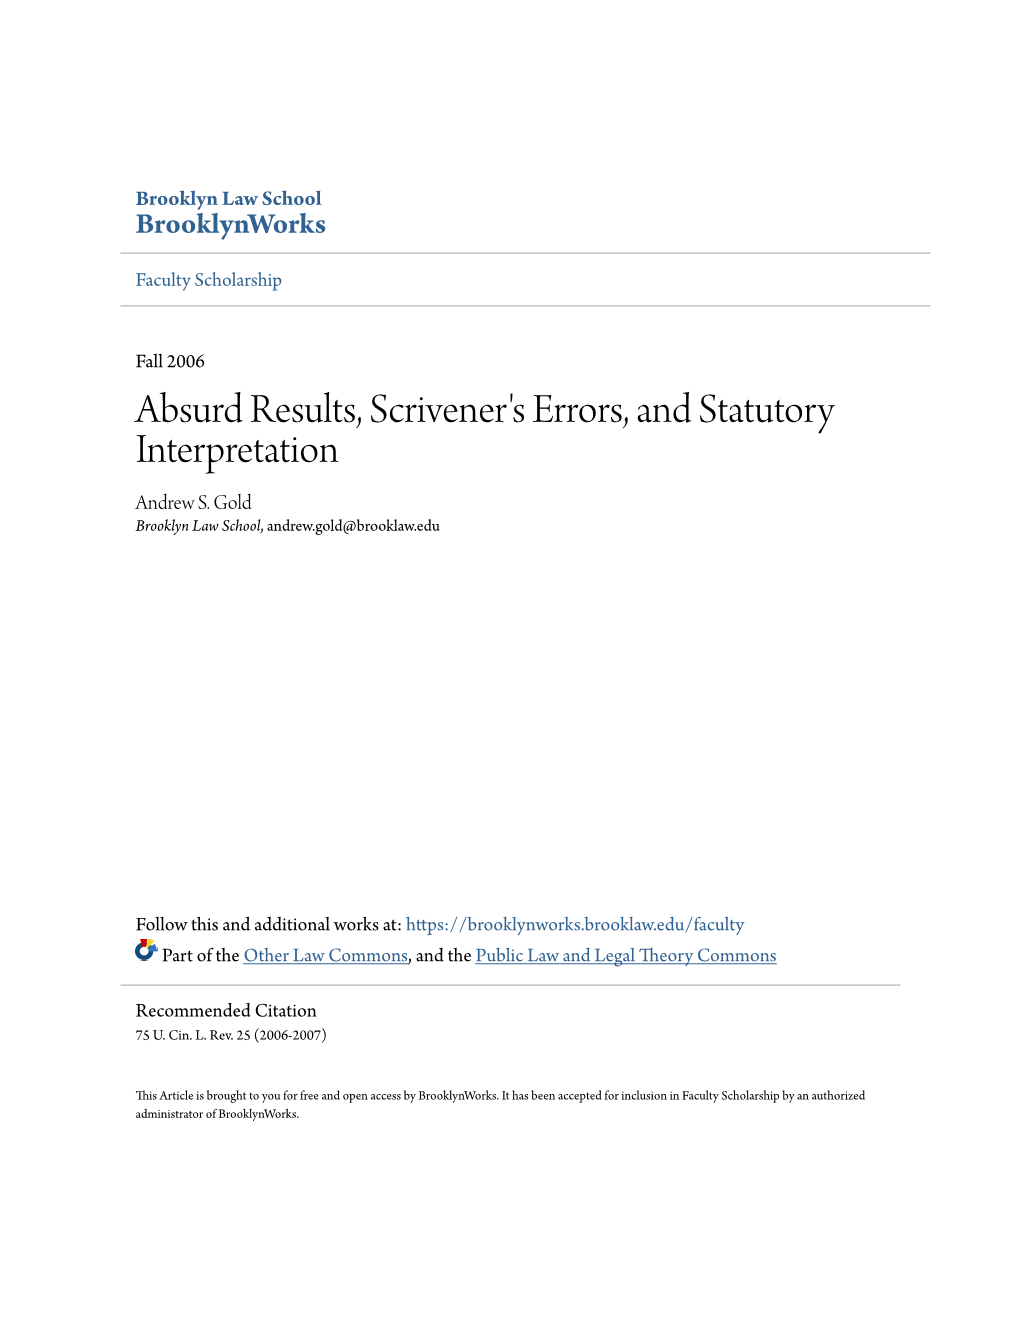 Absurd Results, Scrivener's Errors, and Statutory Interpretation Andrew S